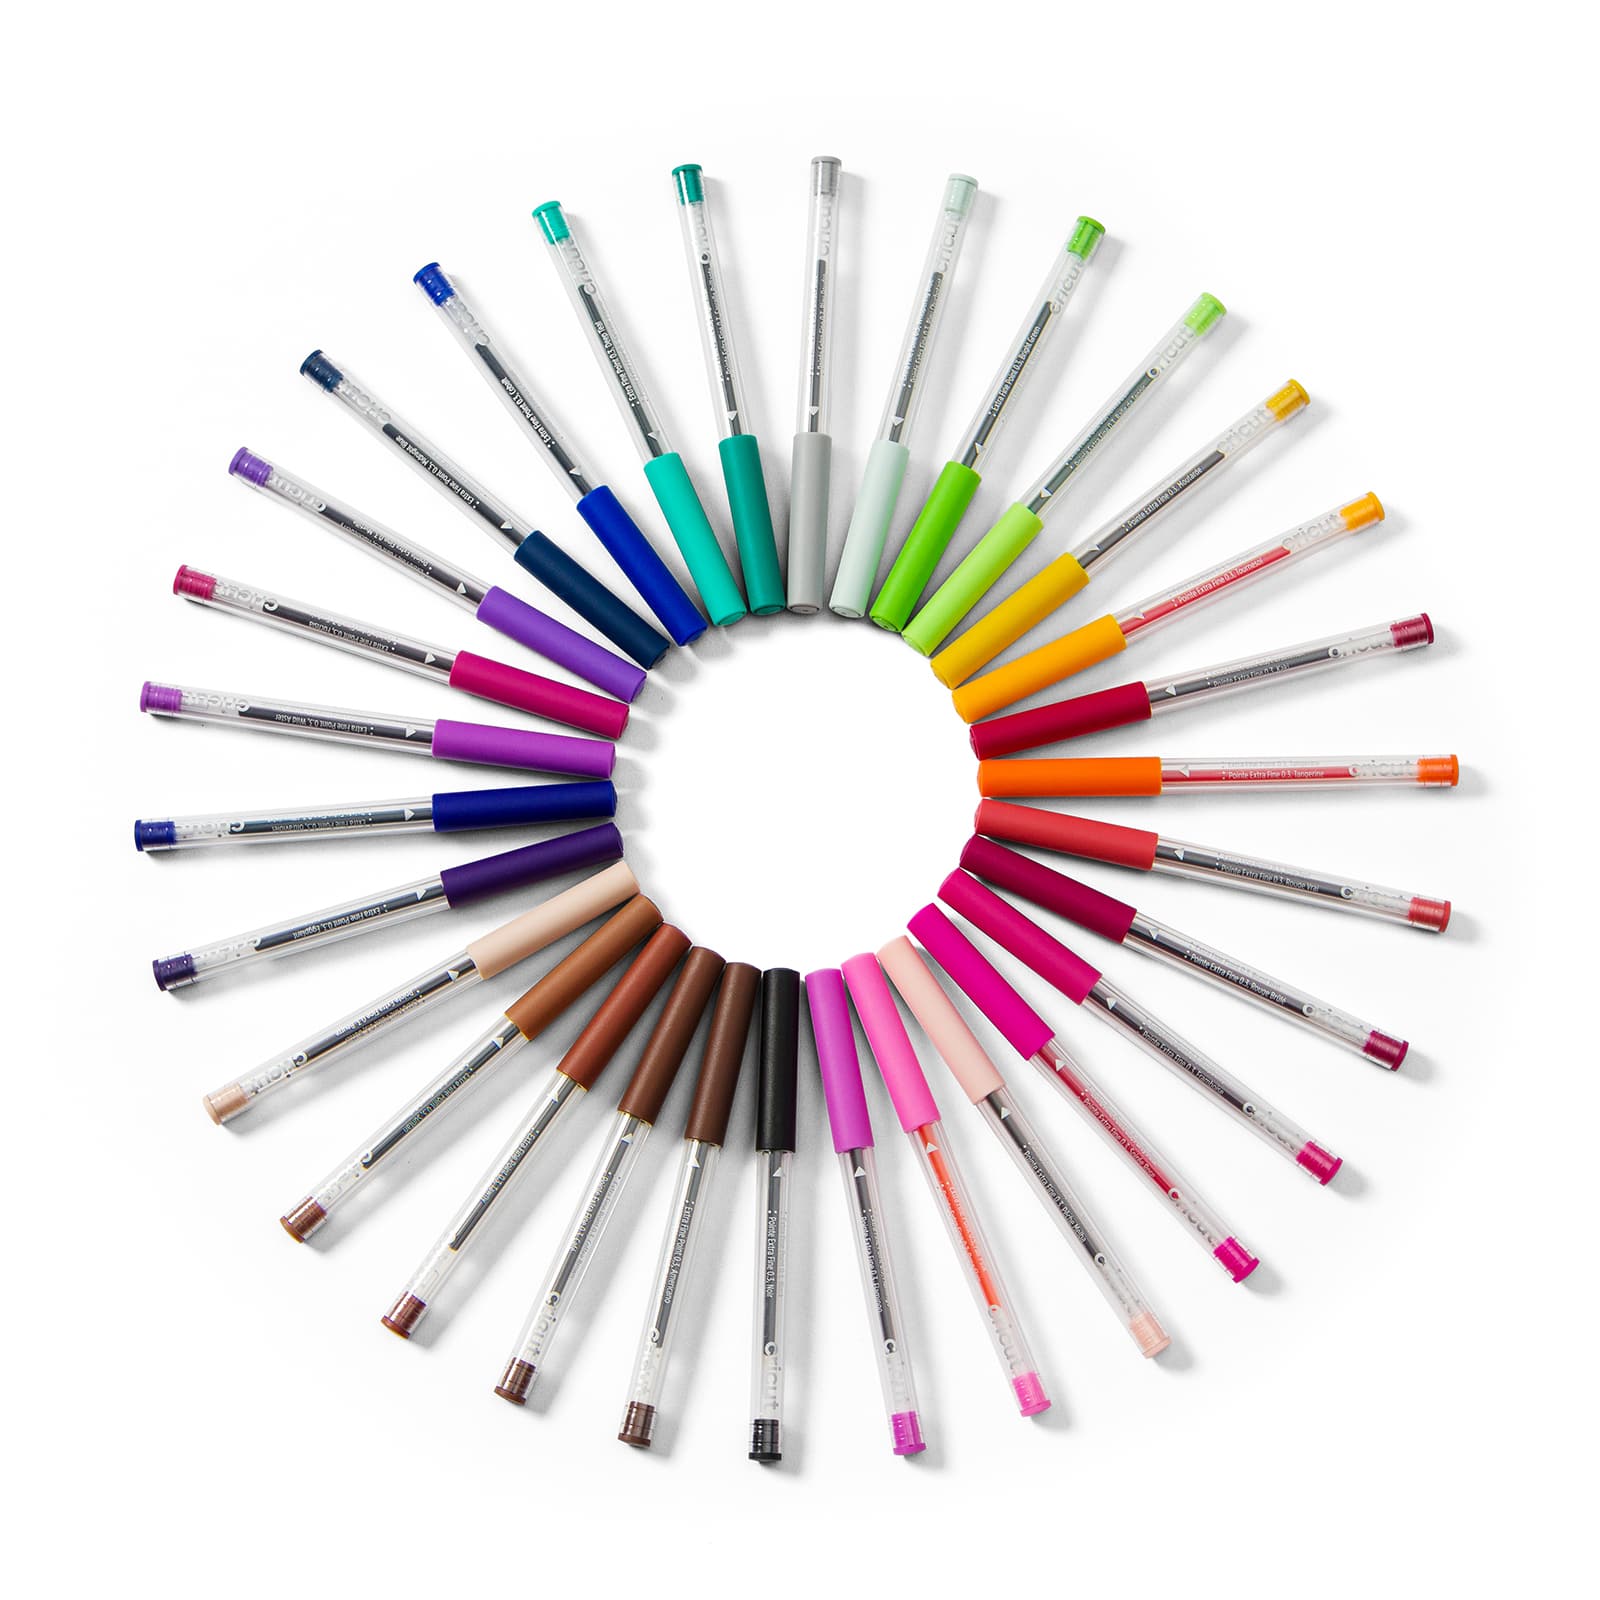 6 Packs: 30 ct. (180 total) Cricut&#xAE; Ultimate Extra Fine Point Pen Set